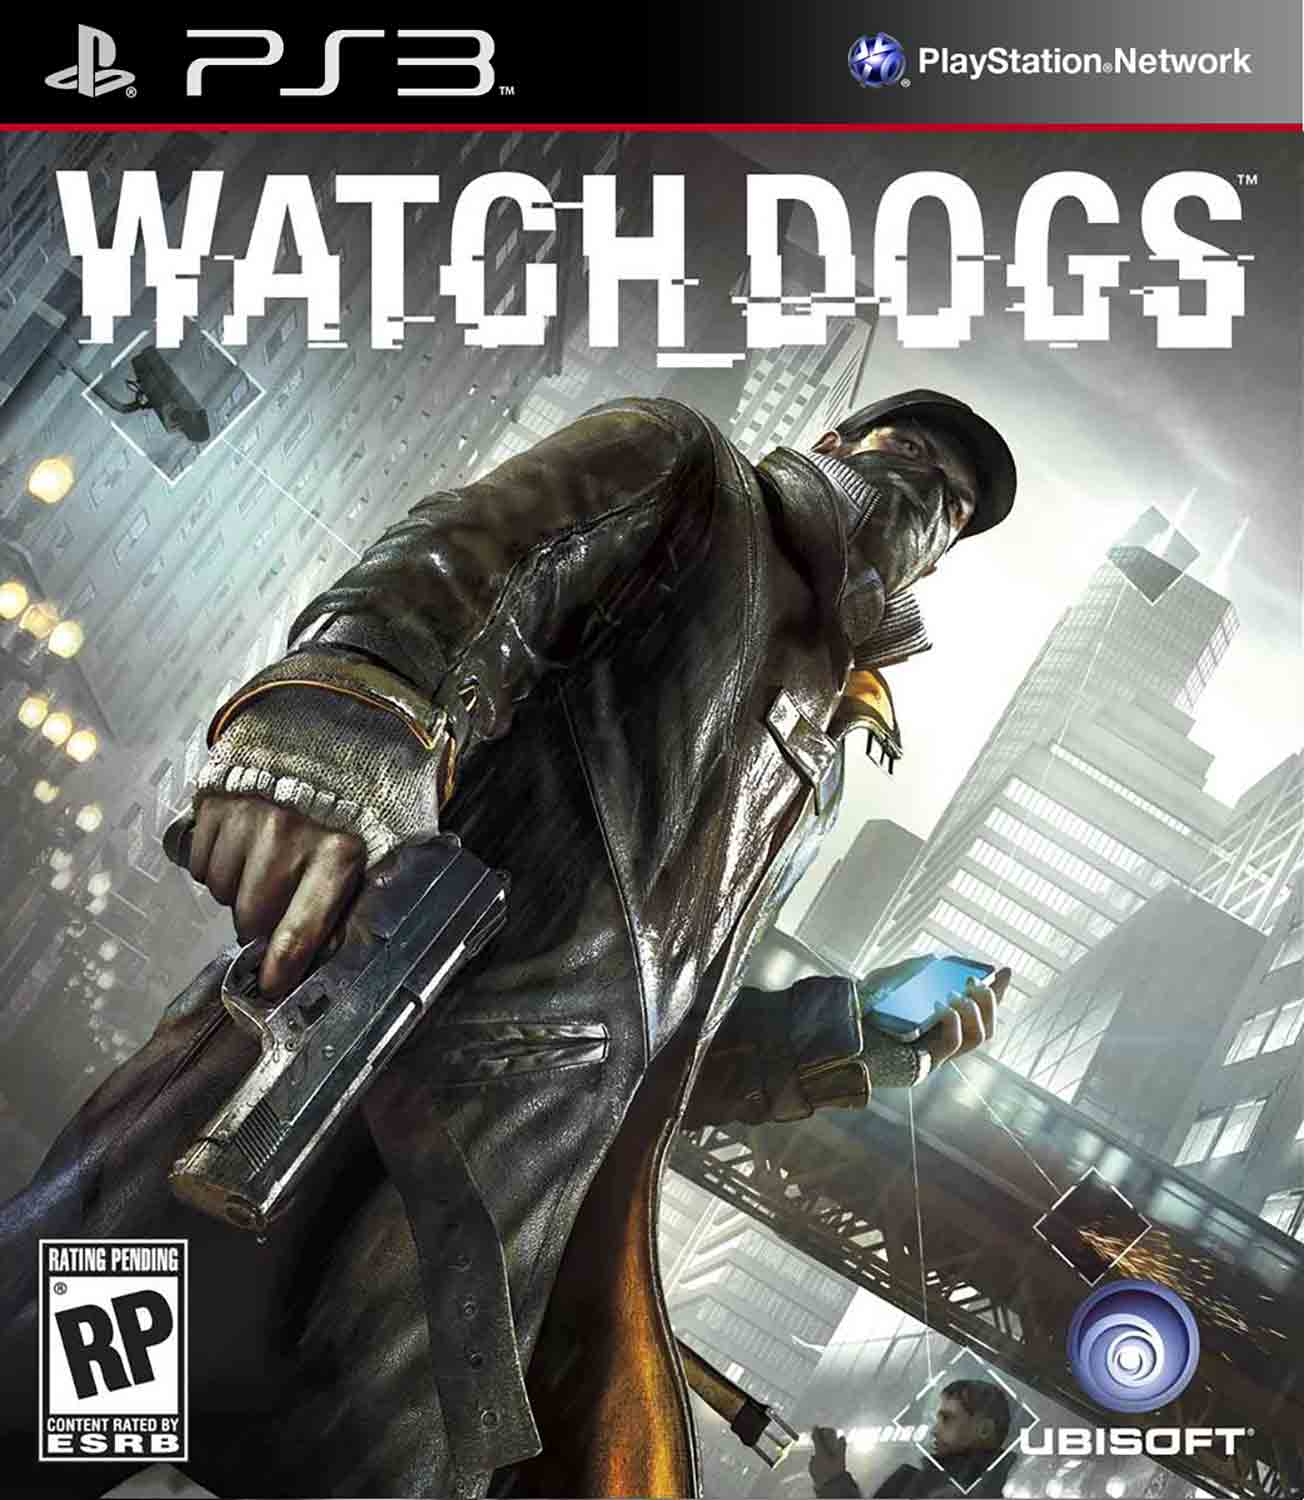 Hra Watch Dogs pro PS3 Playstation 3 konzole